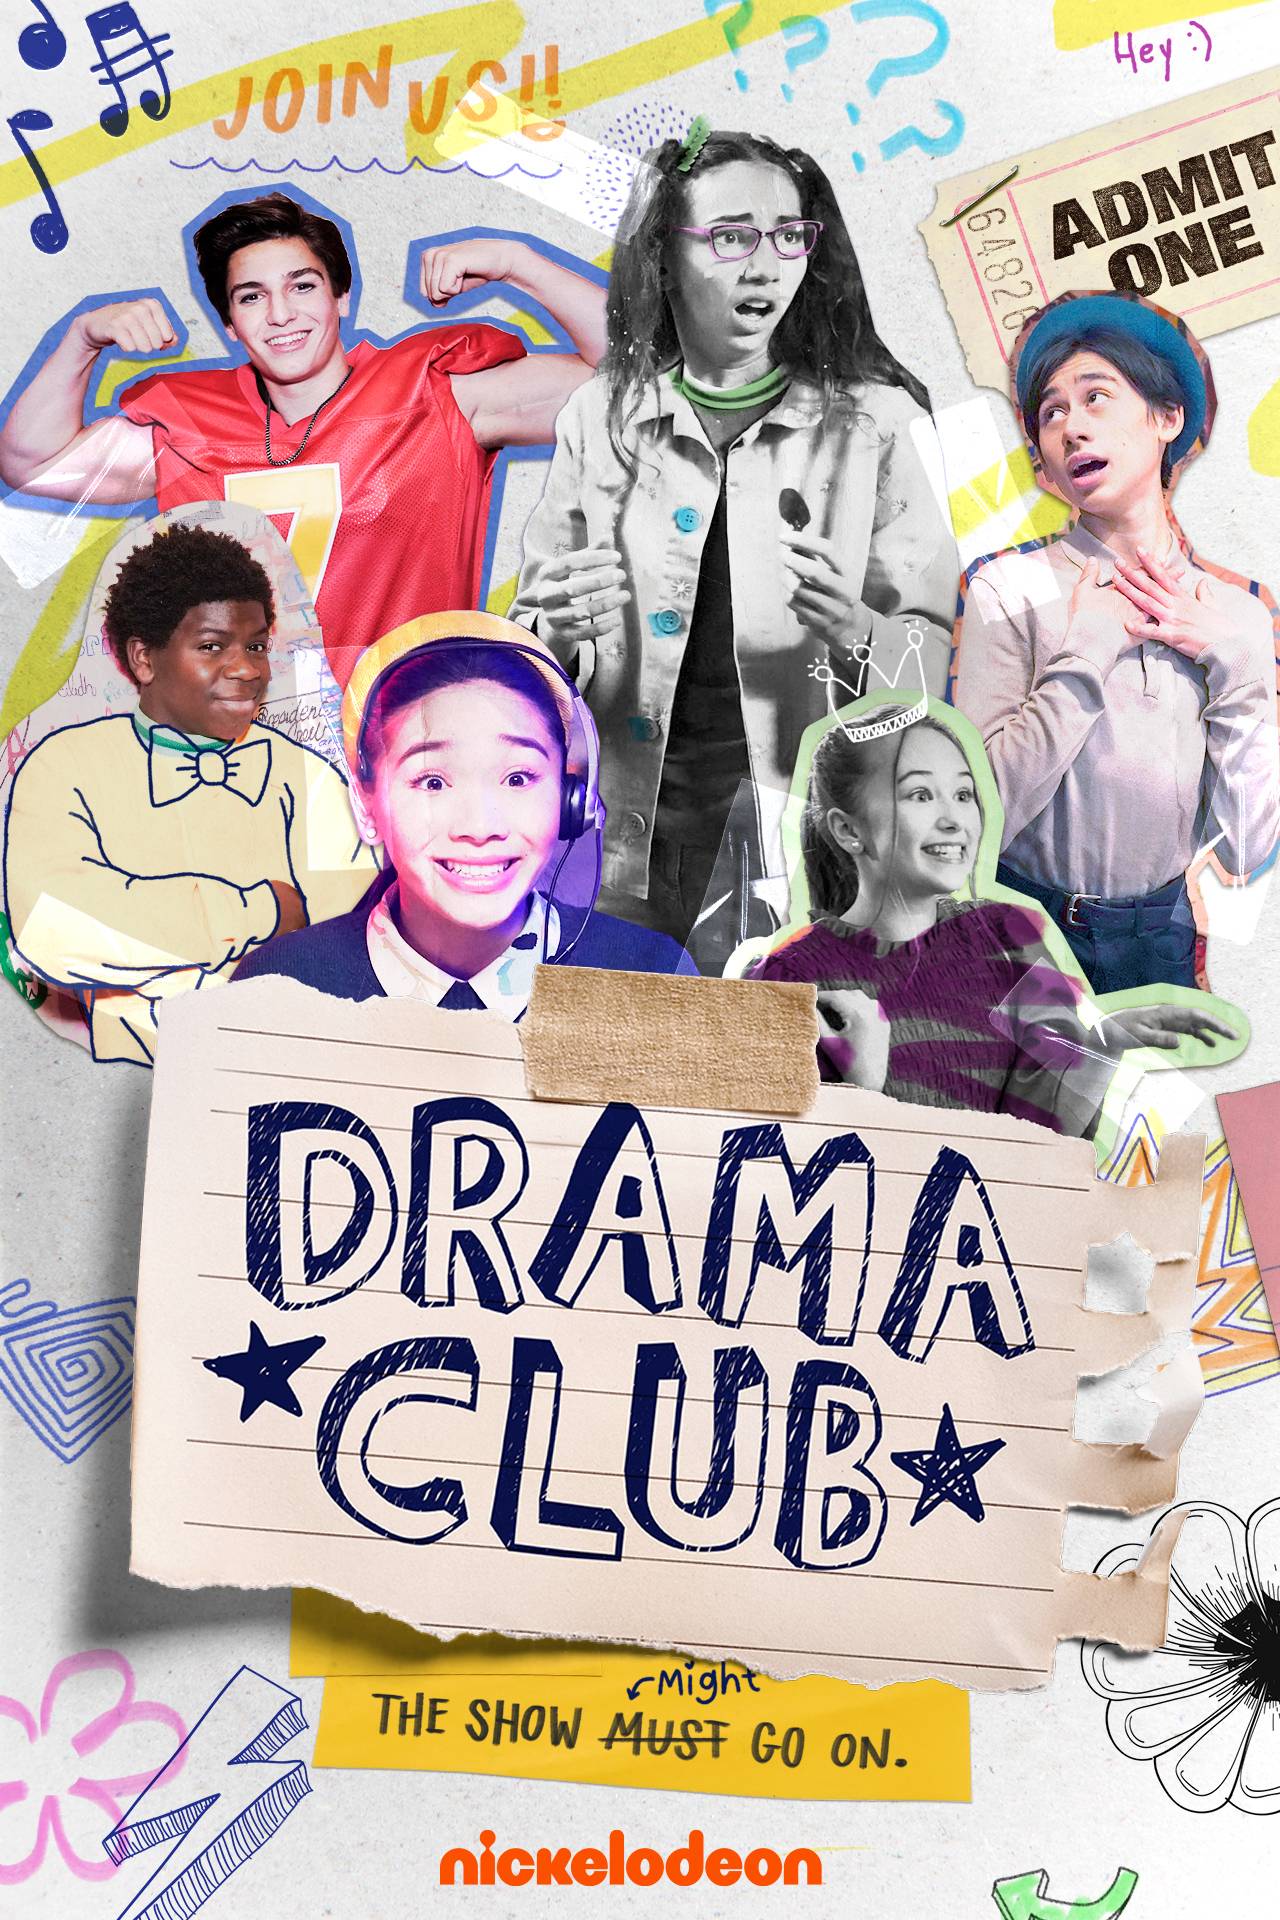 DRAMA CLUB Full Episode 🌟 New Nickelodeon Comedy Series